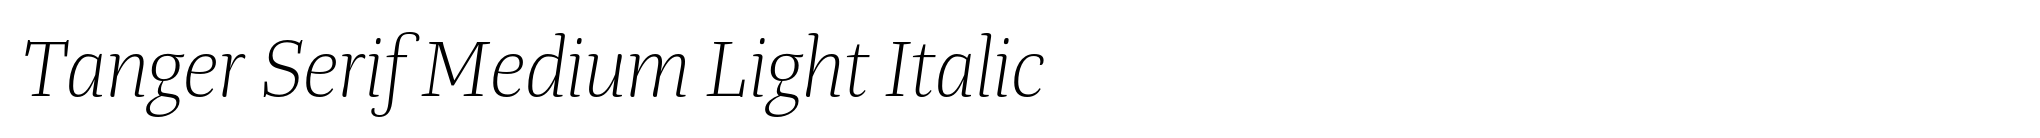 Tanger Serif Medium Light Italic image